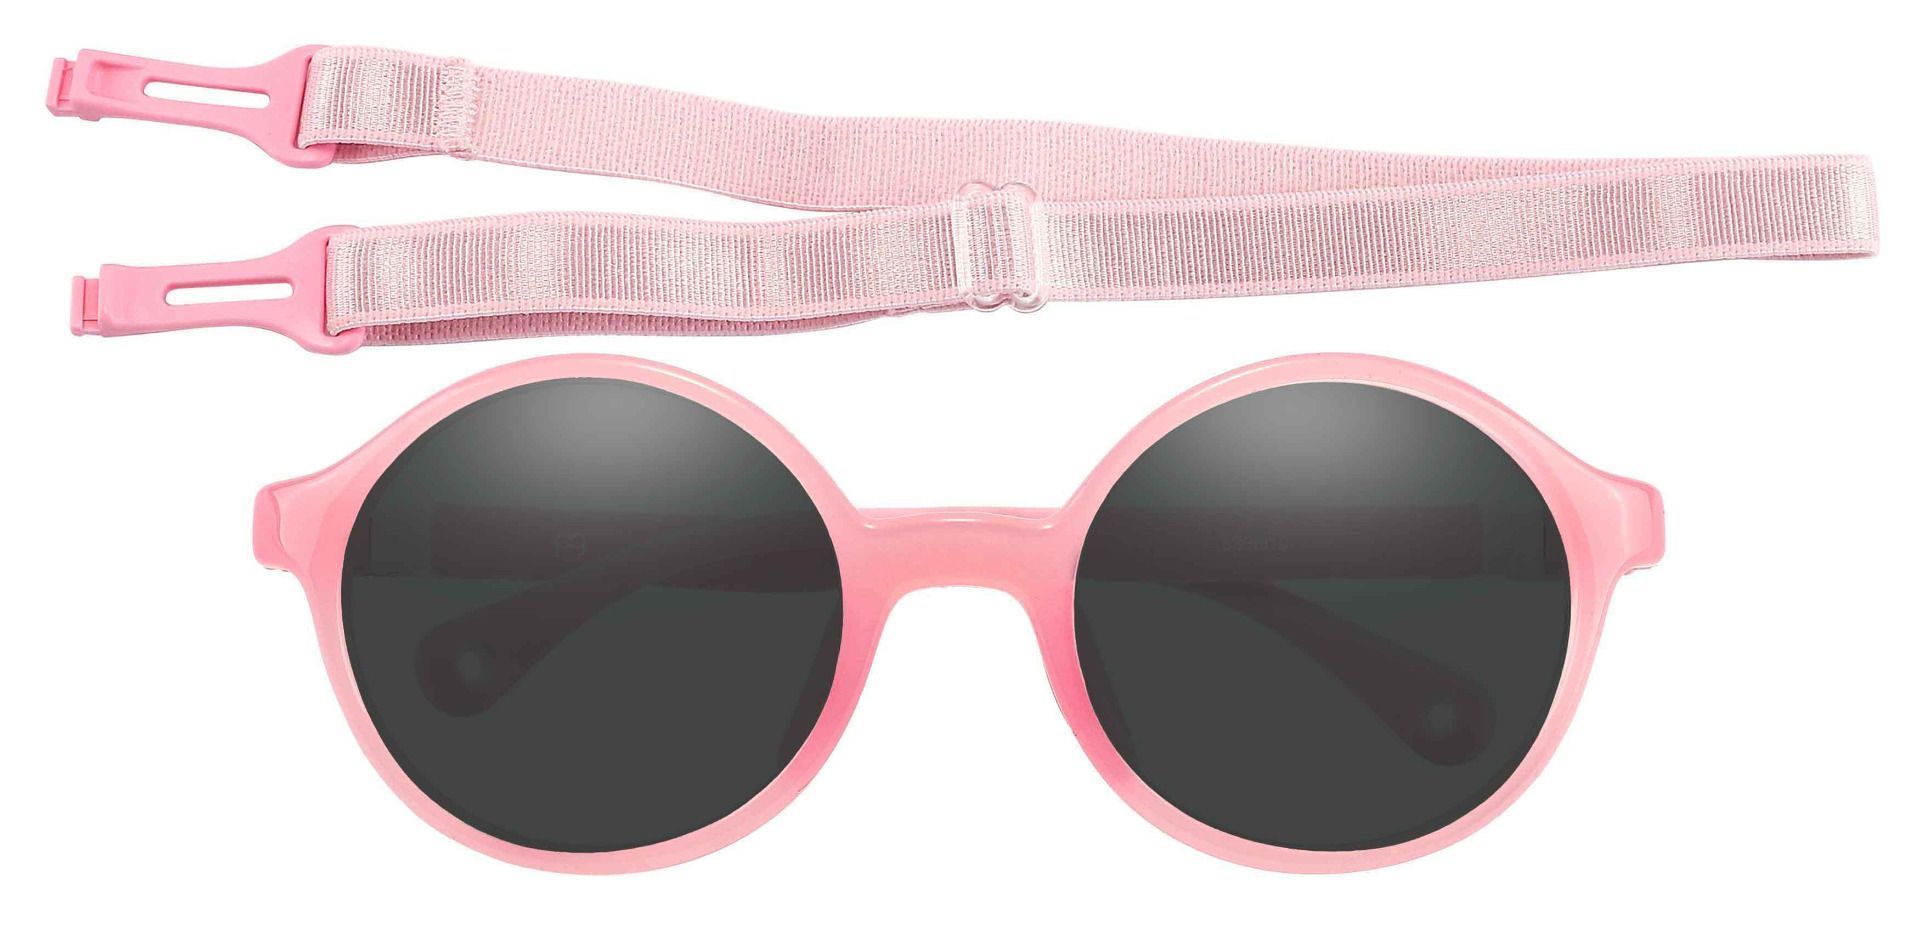 Sammy Round Prescription Sunglasses - Pink Frame With Gray Lenses